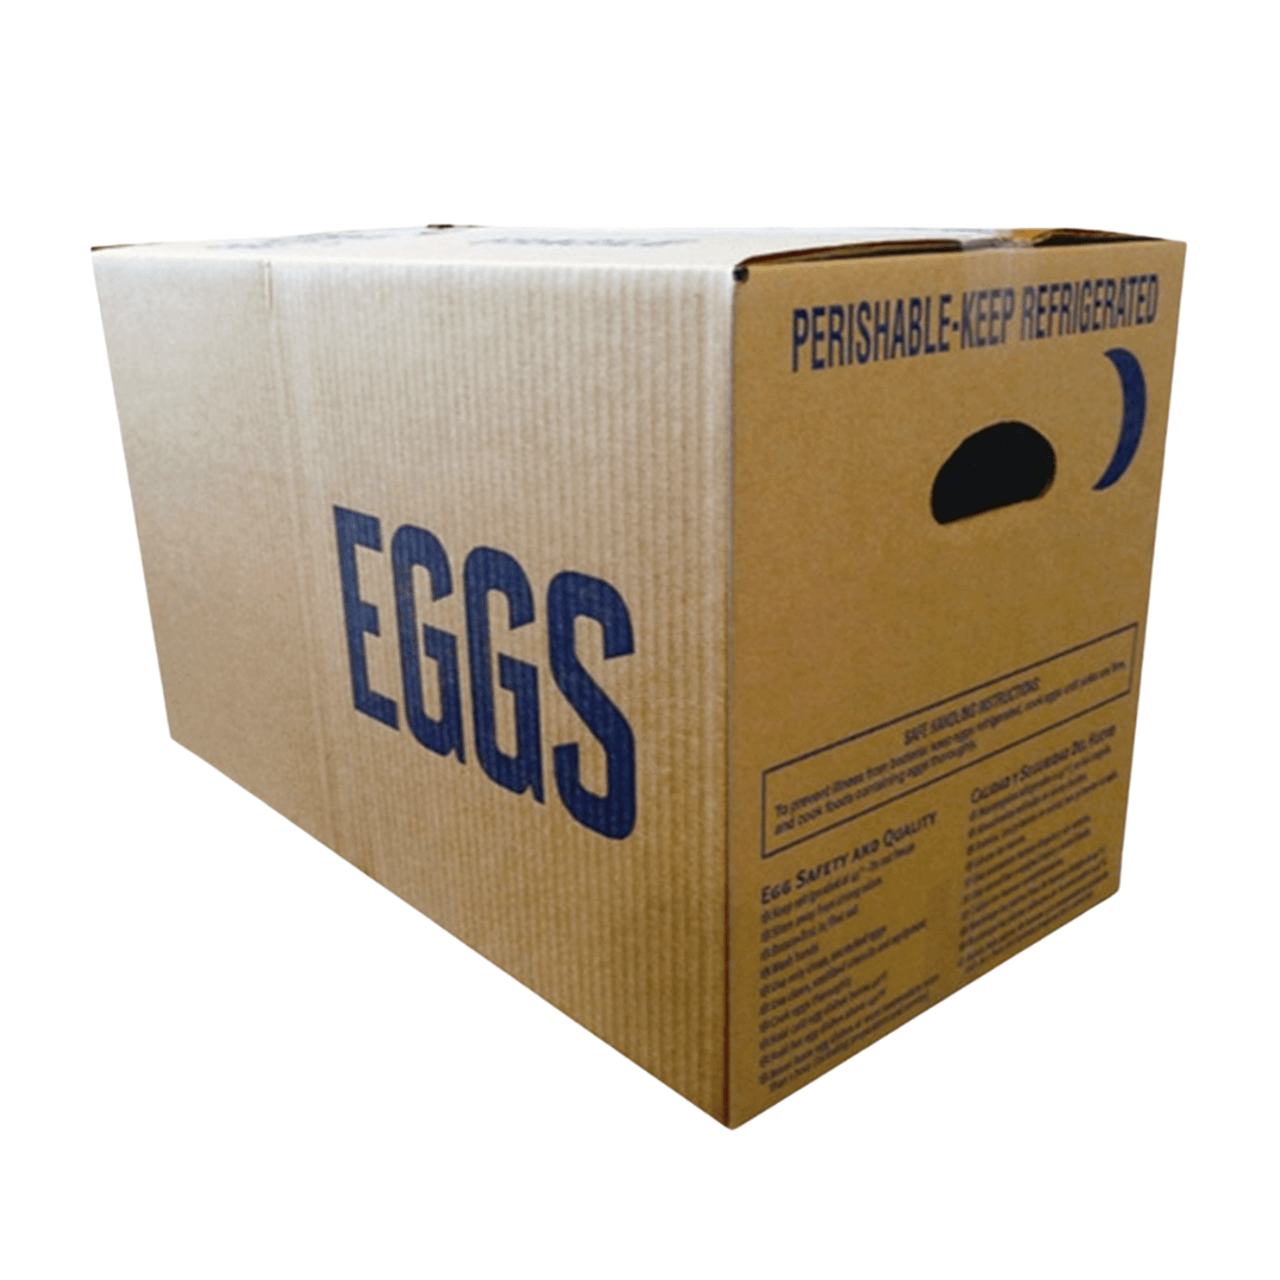 Blue 12-Egg Blank Styrofoam Carton